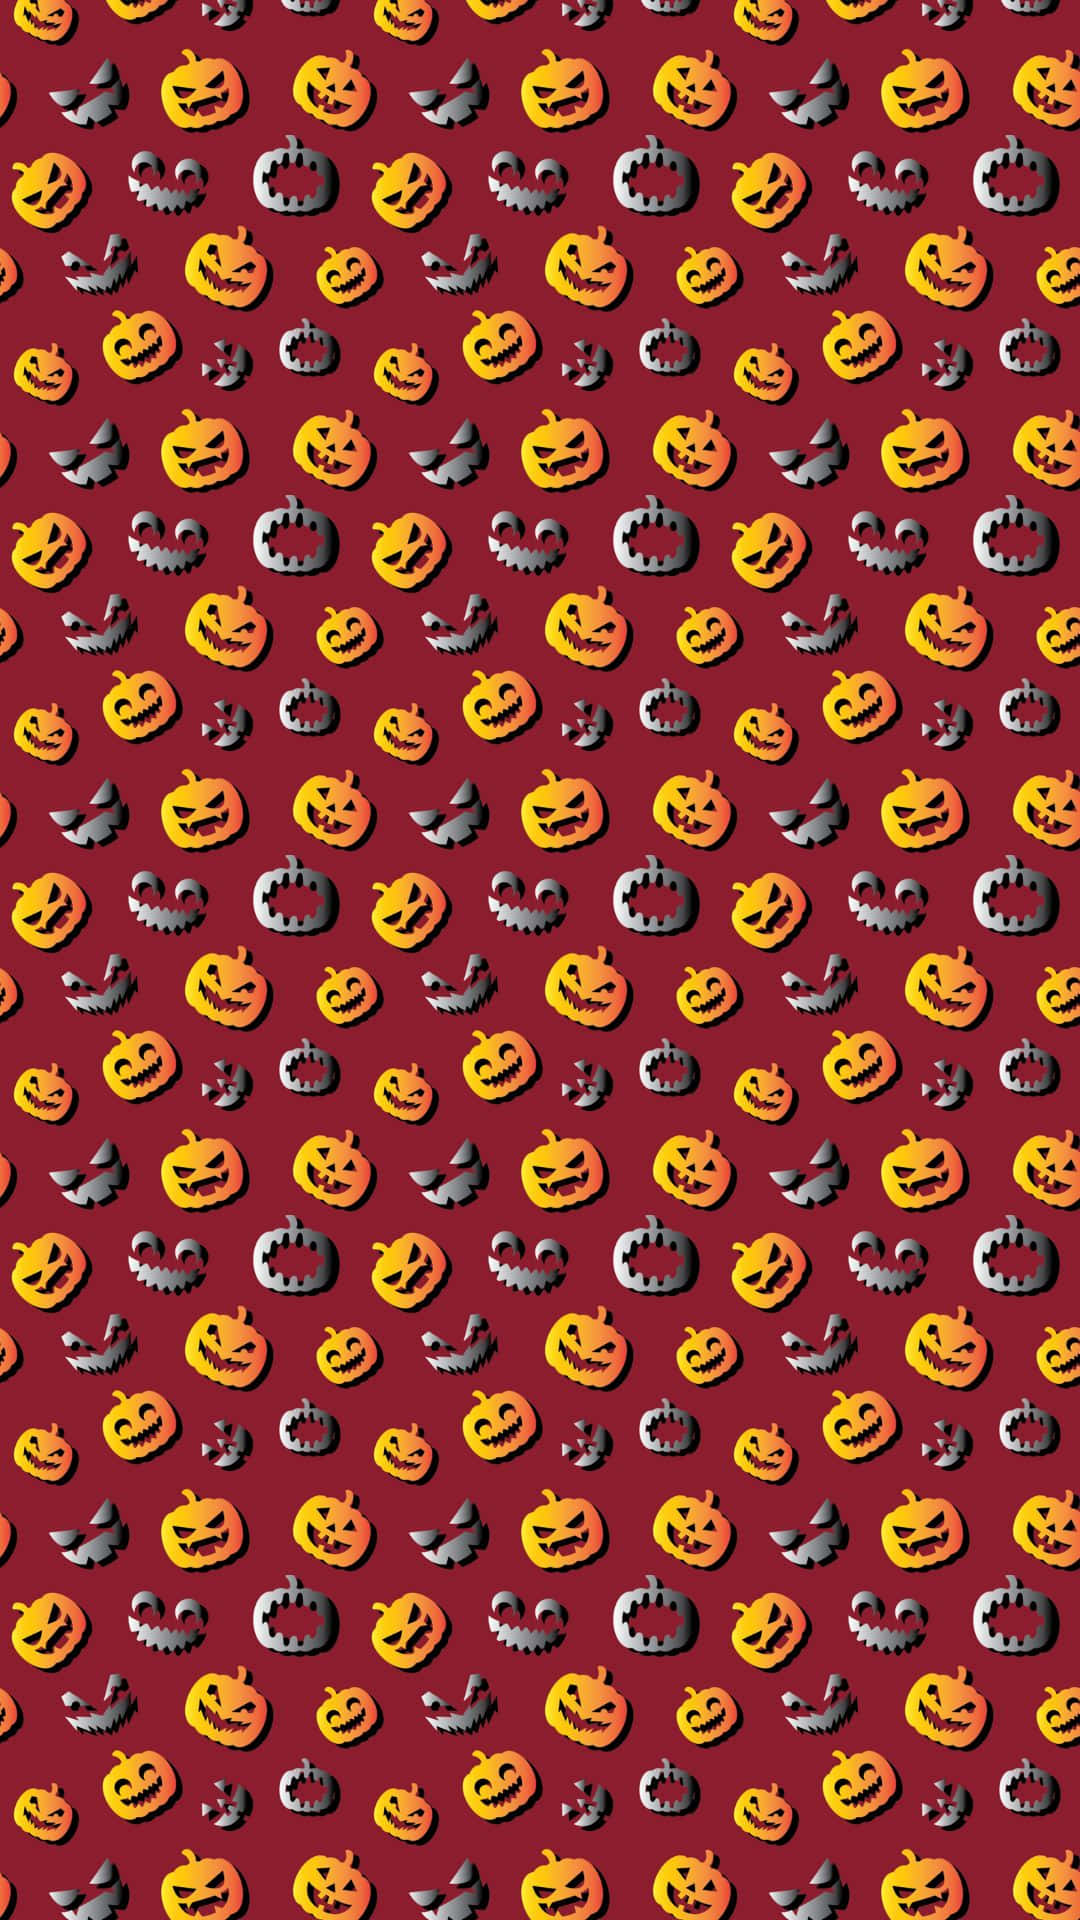 Adorable Festive Pumpkin Wallpaper